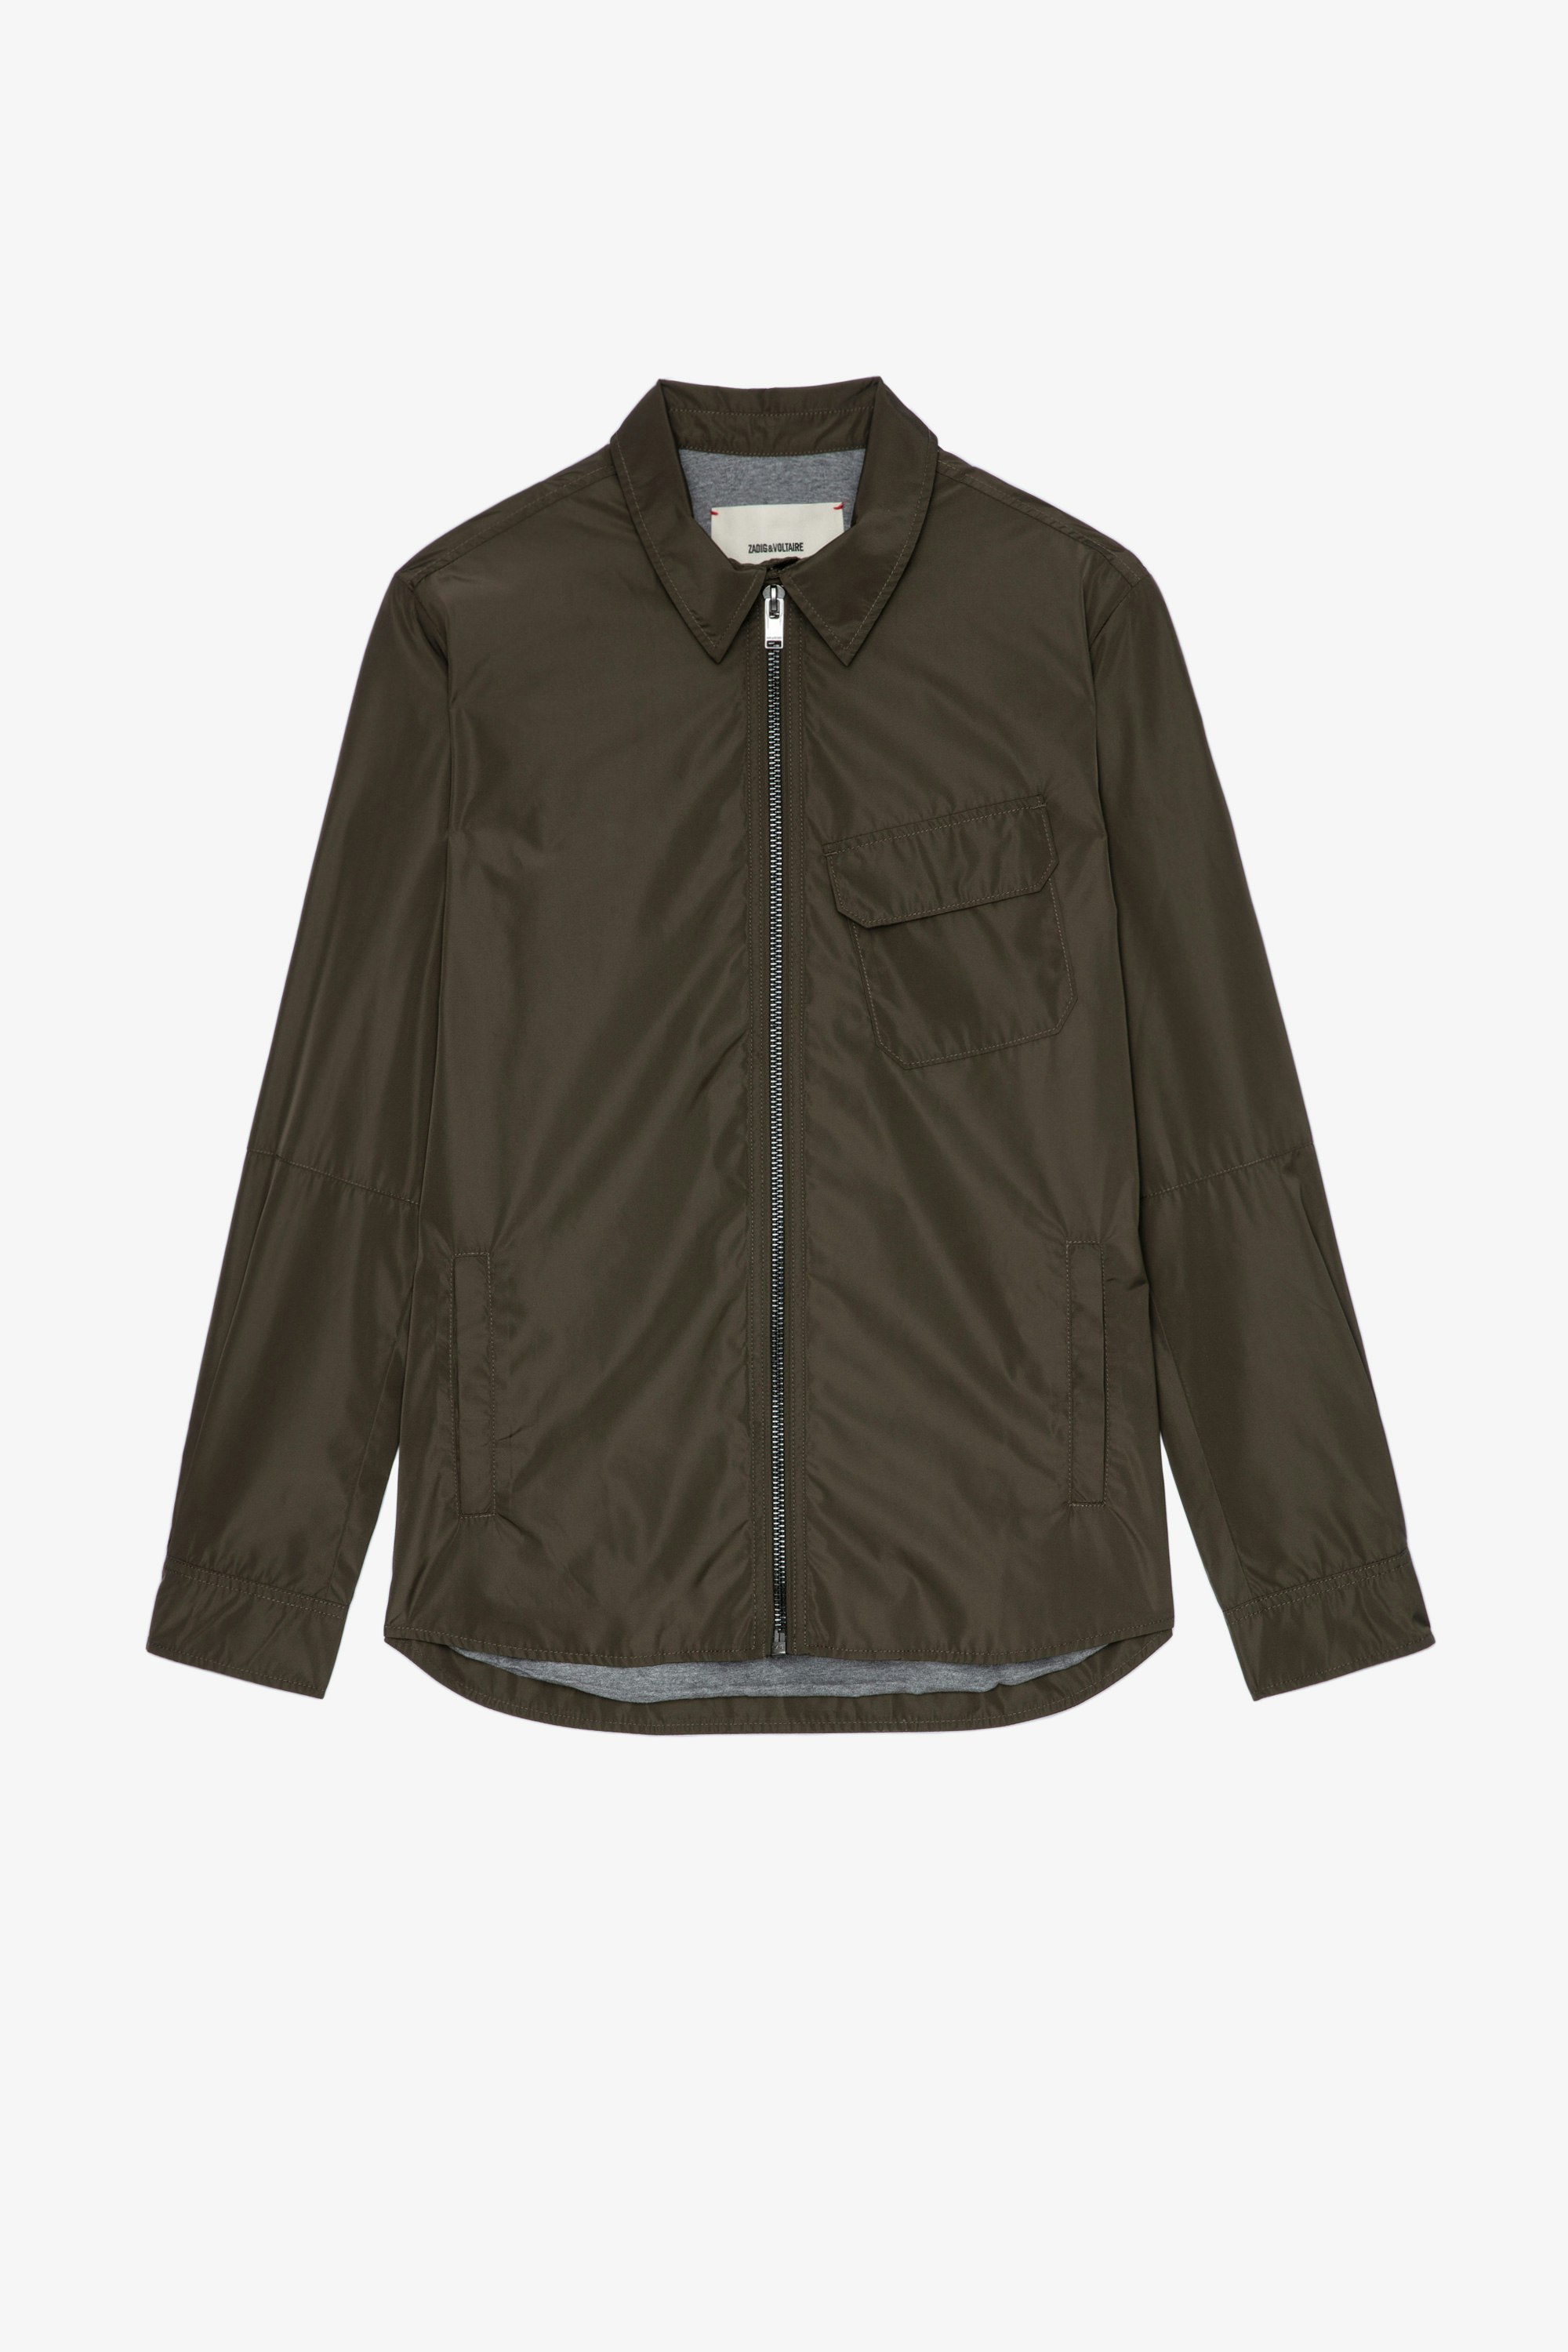 Kaysey Nylon Jacket Men’s khaki nylon jacket 